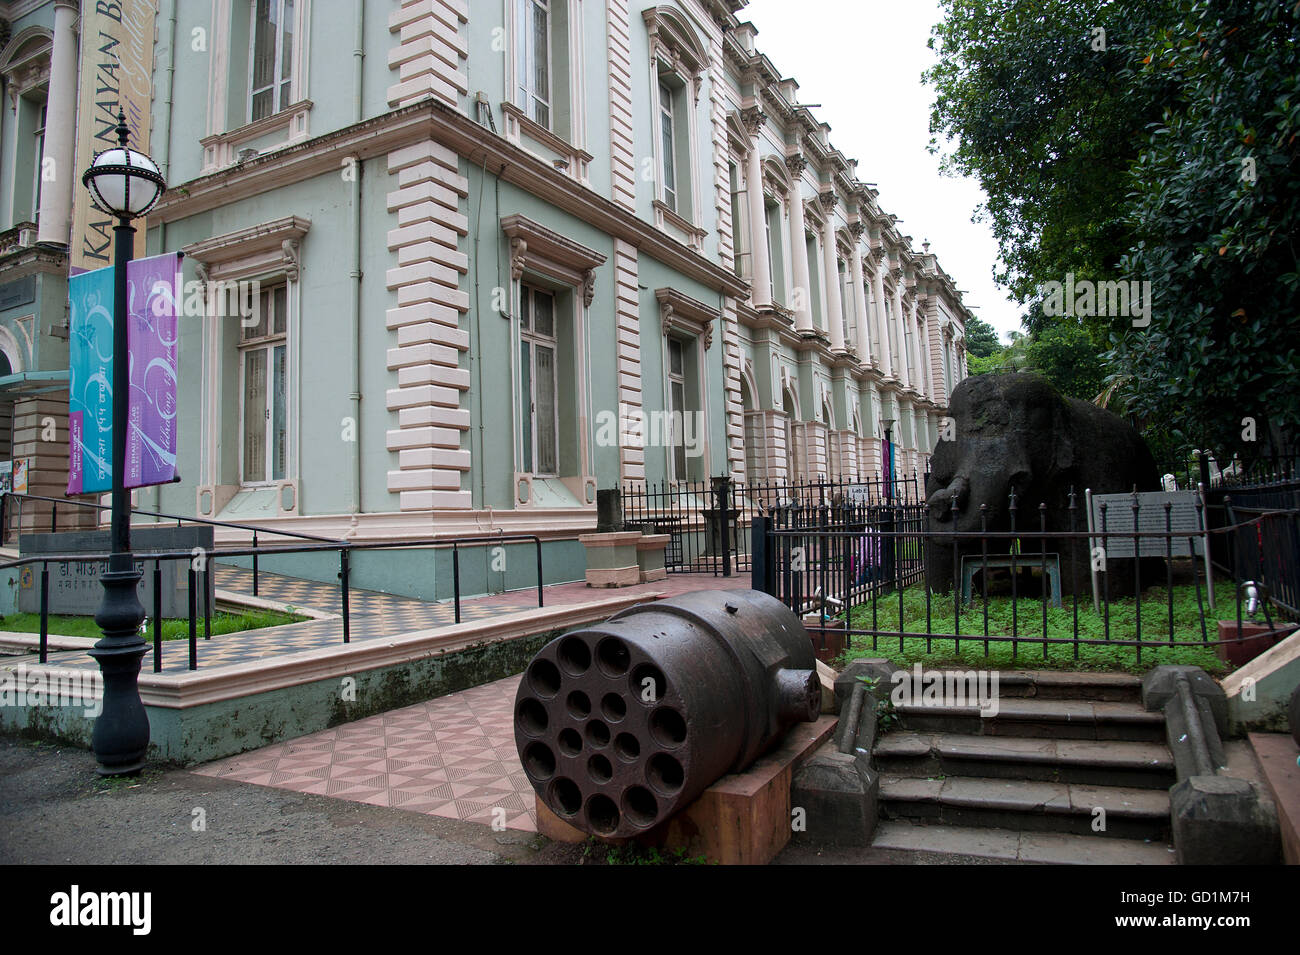 The image of Bhau Daji Lad Museum was taken in Mumbai, India Stock Photo